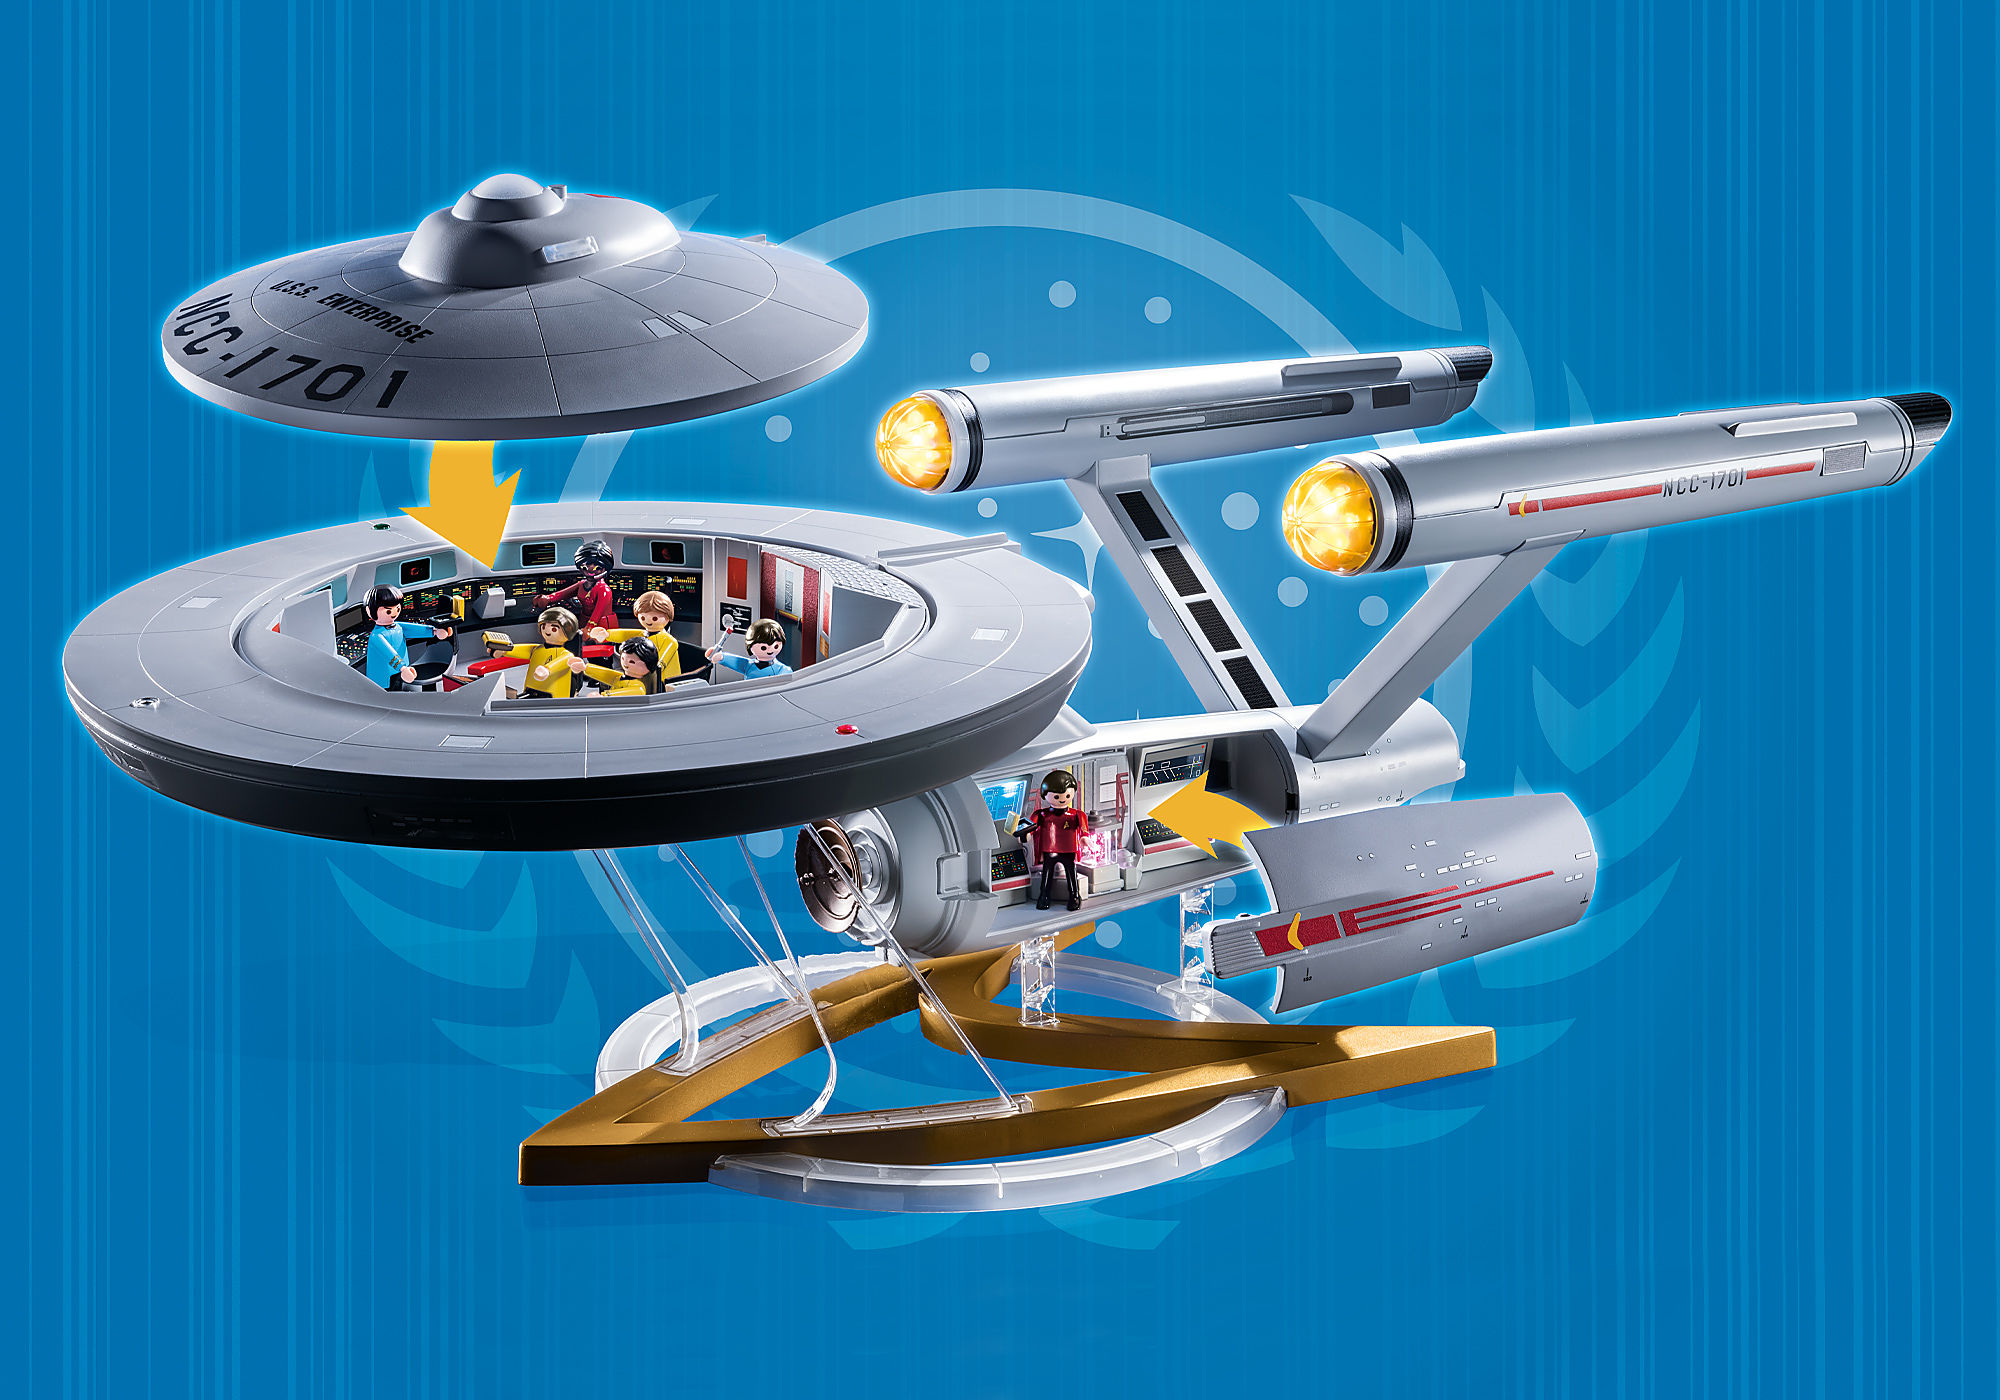 PLAYMOBIL Star Trek 70548 U.S.S. Enterprise NCC-1701, med AR